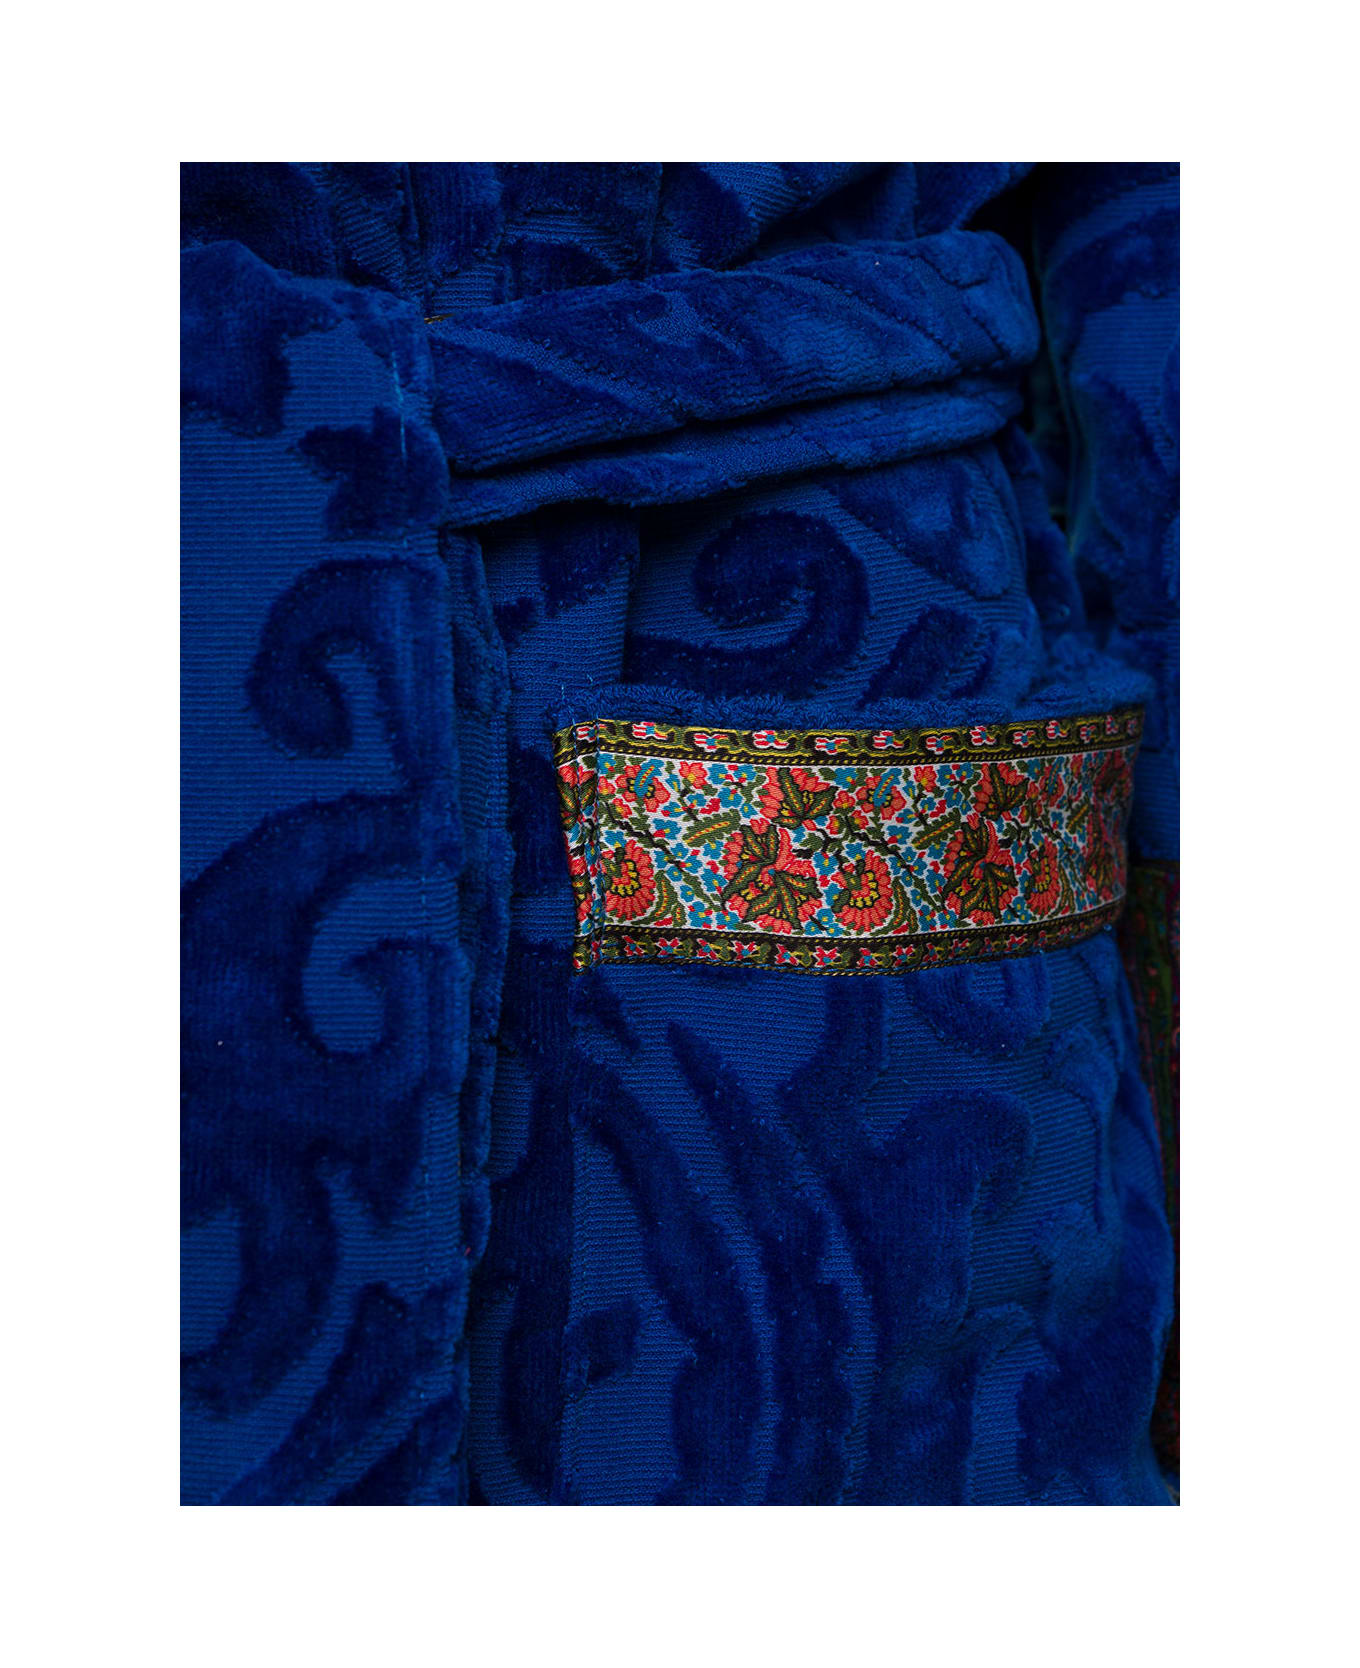 Etro 'new Tradition' Blue Hooded Bath Robe With Ornamental Print Etro Home - Blu